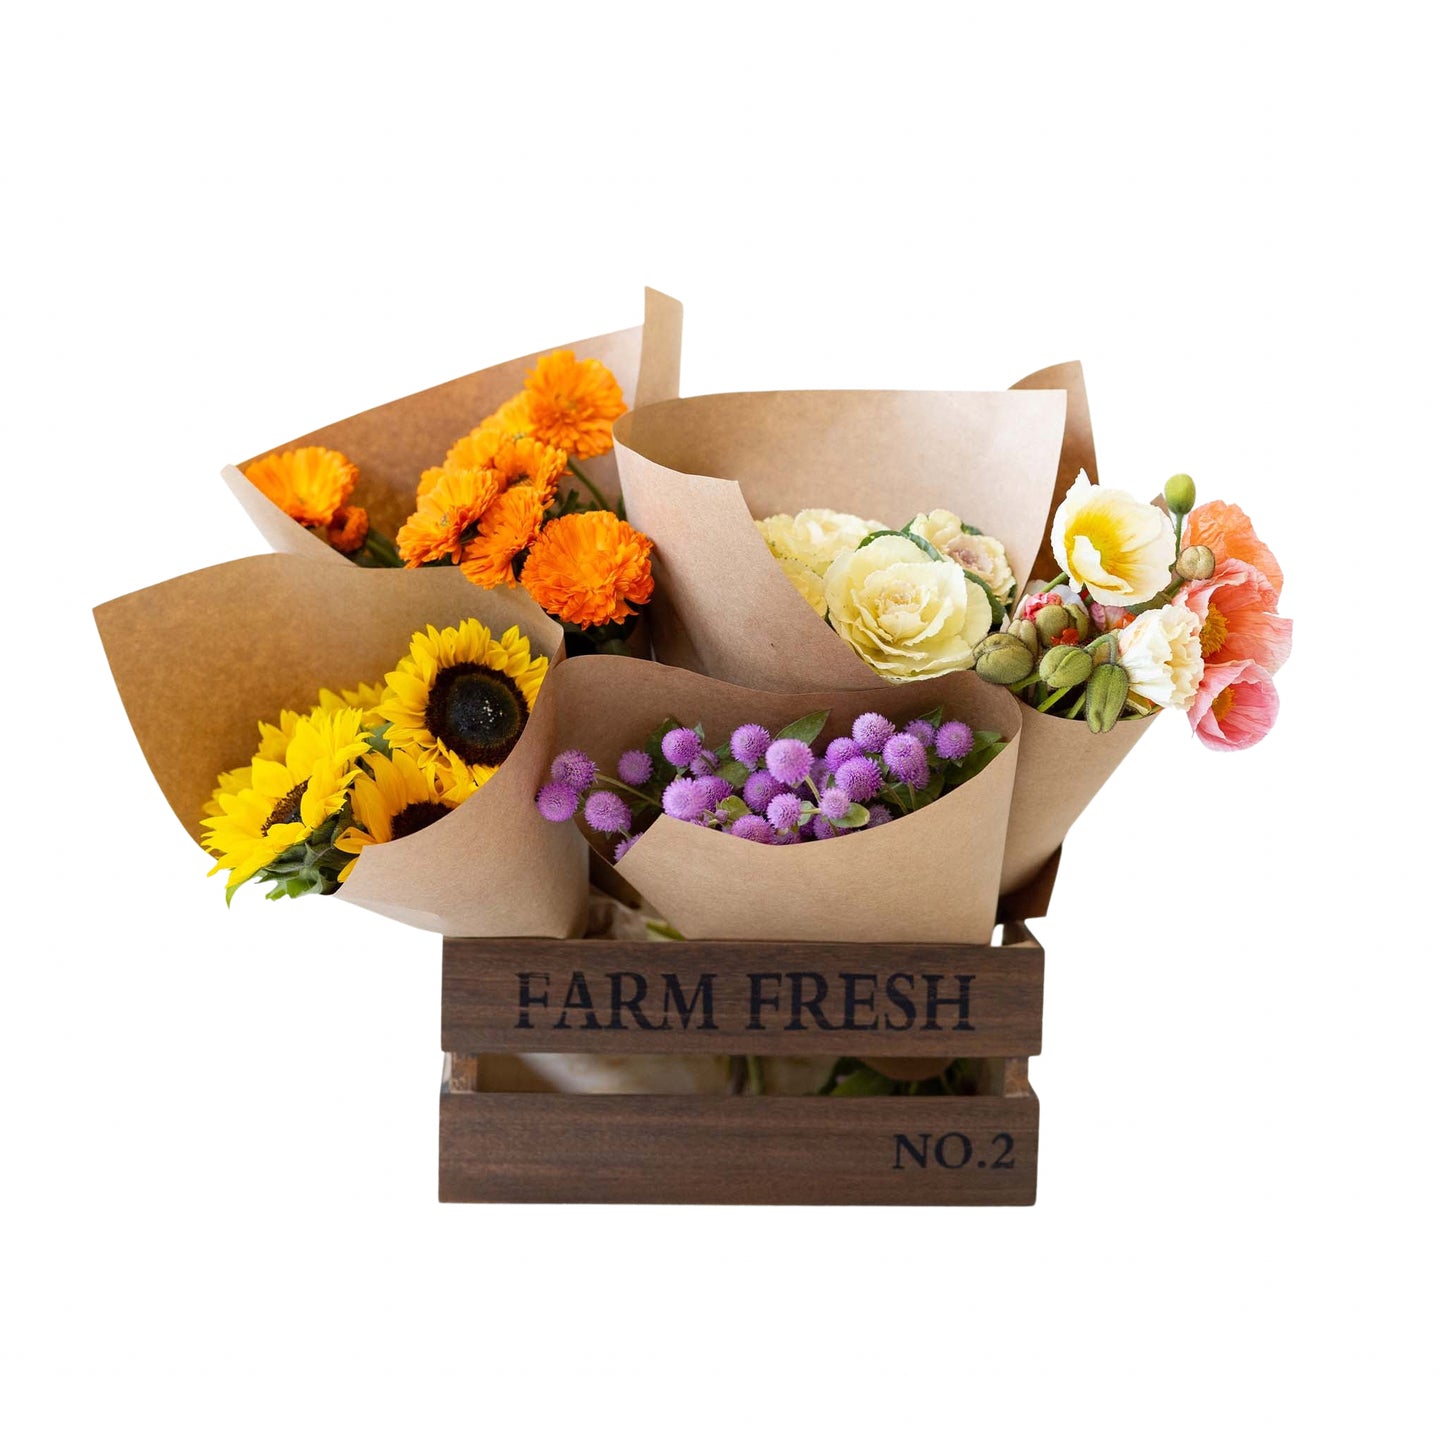 Farm Fresh Boxes - Classic